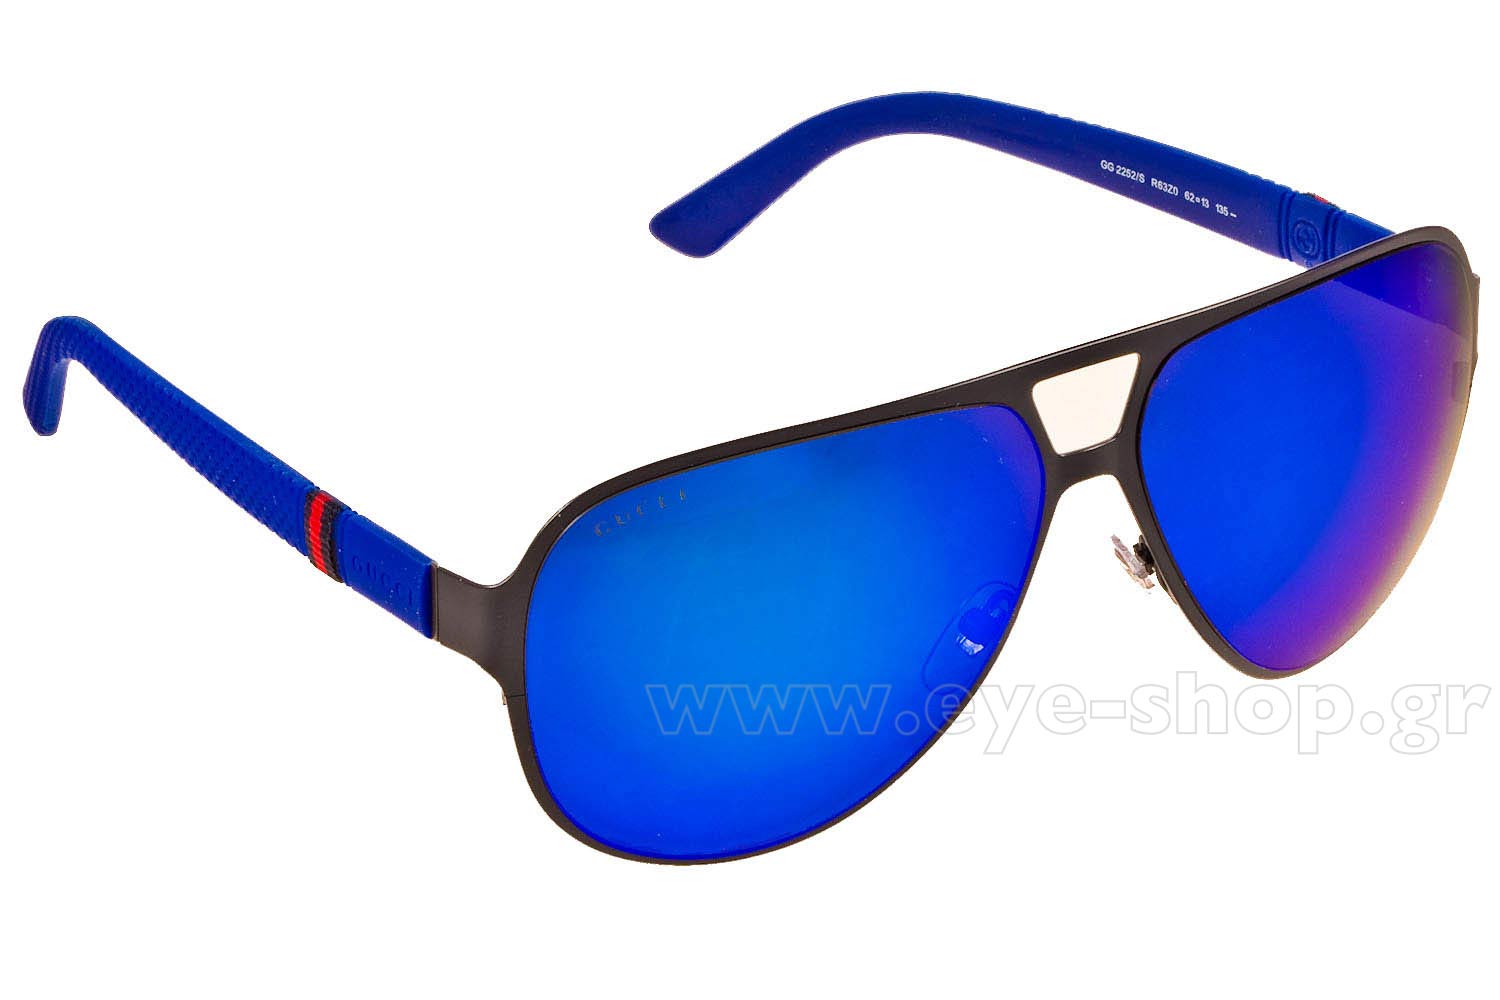 gucci sunglasses men blue